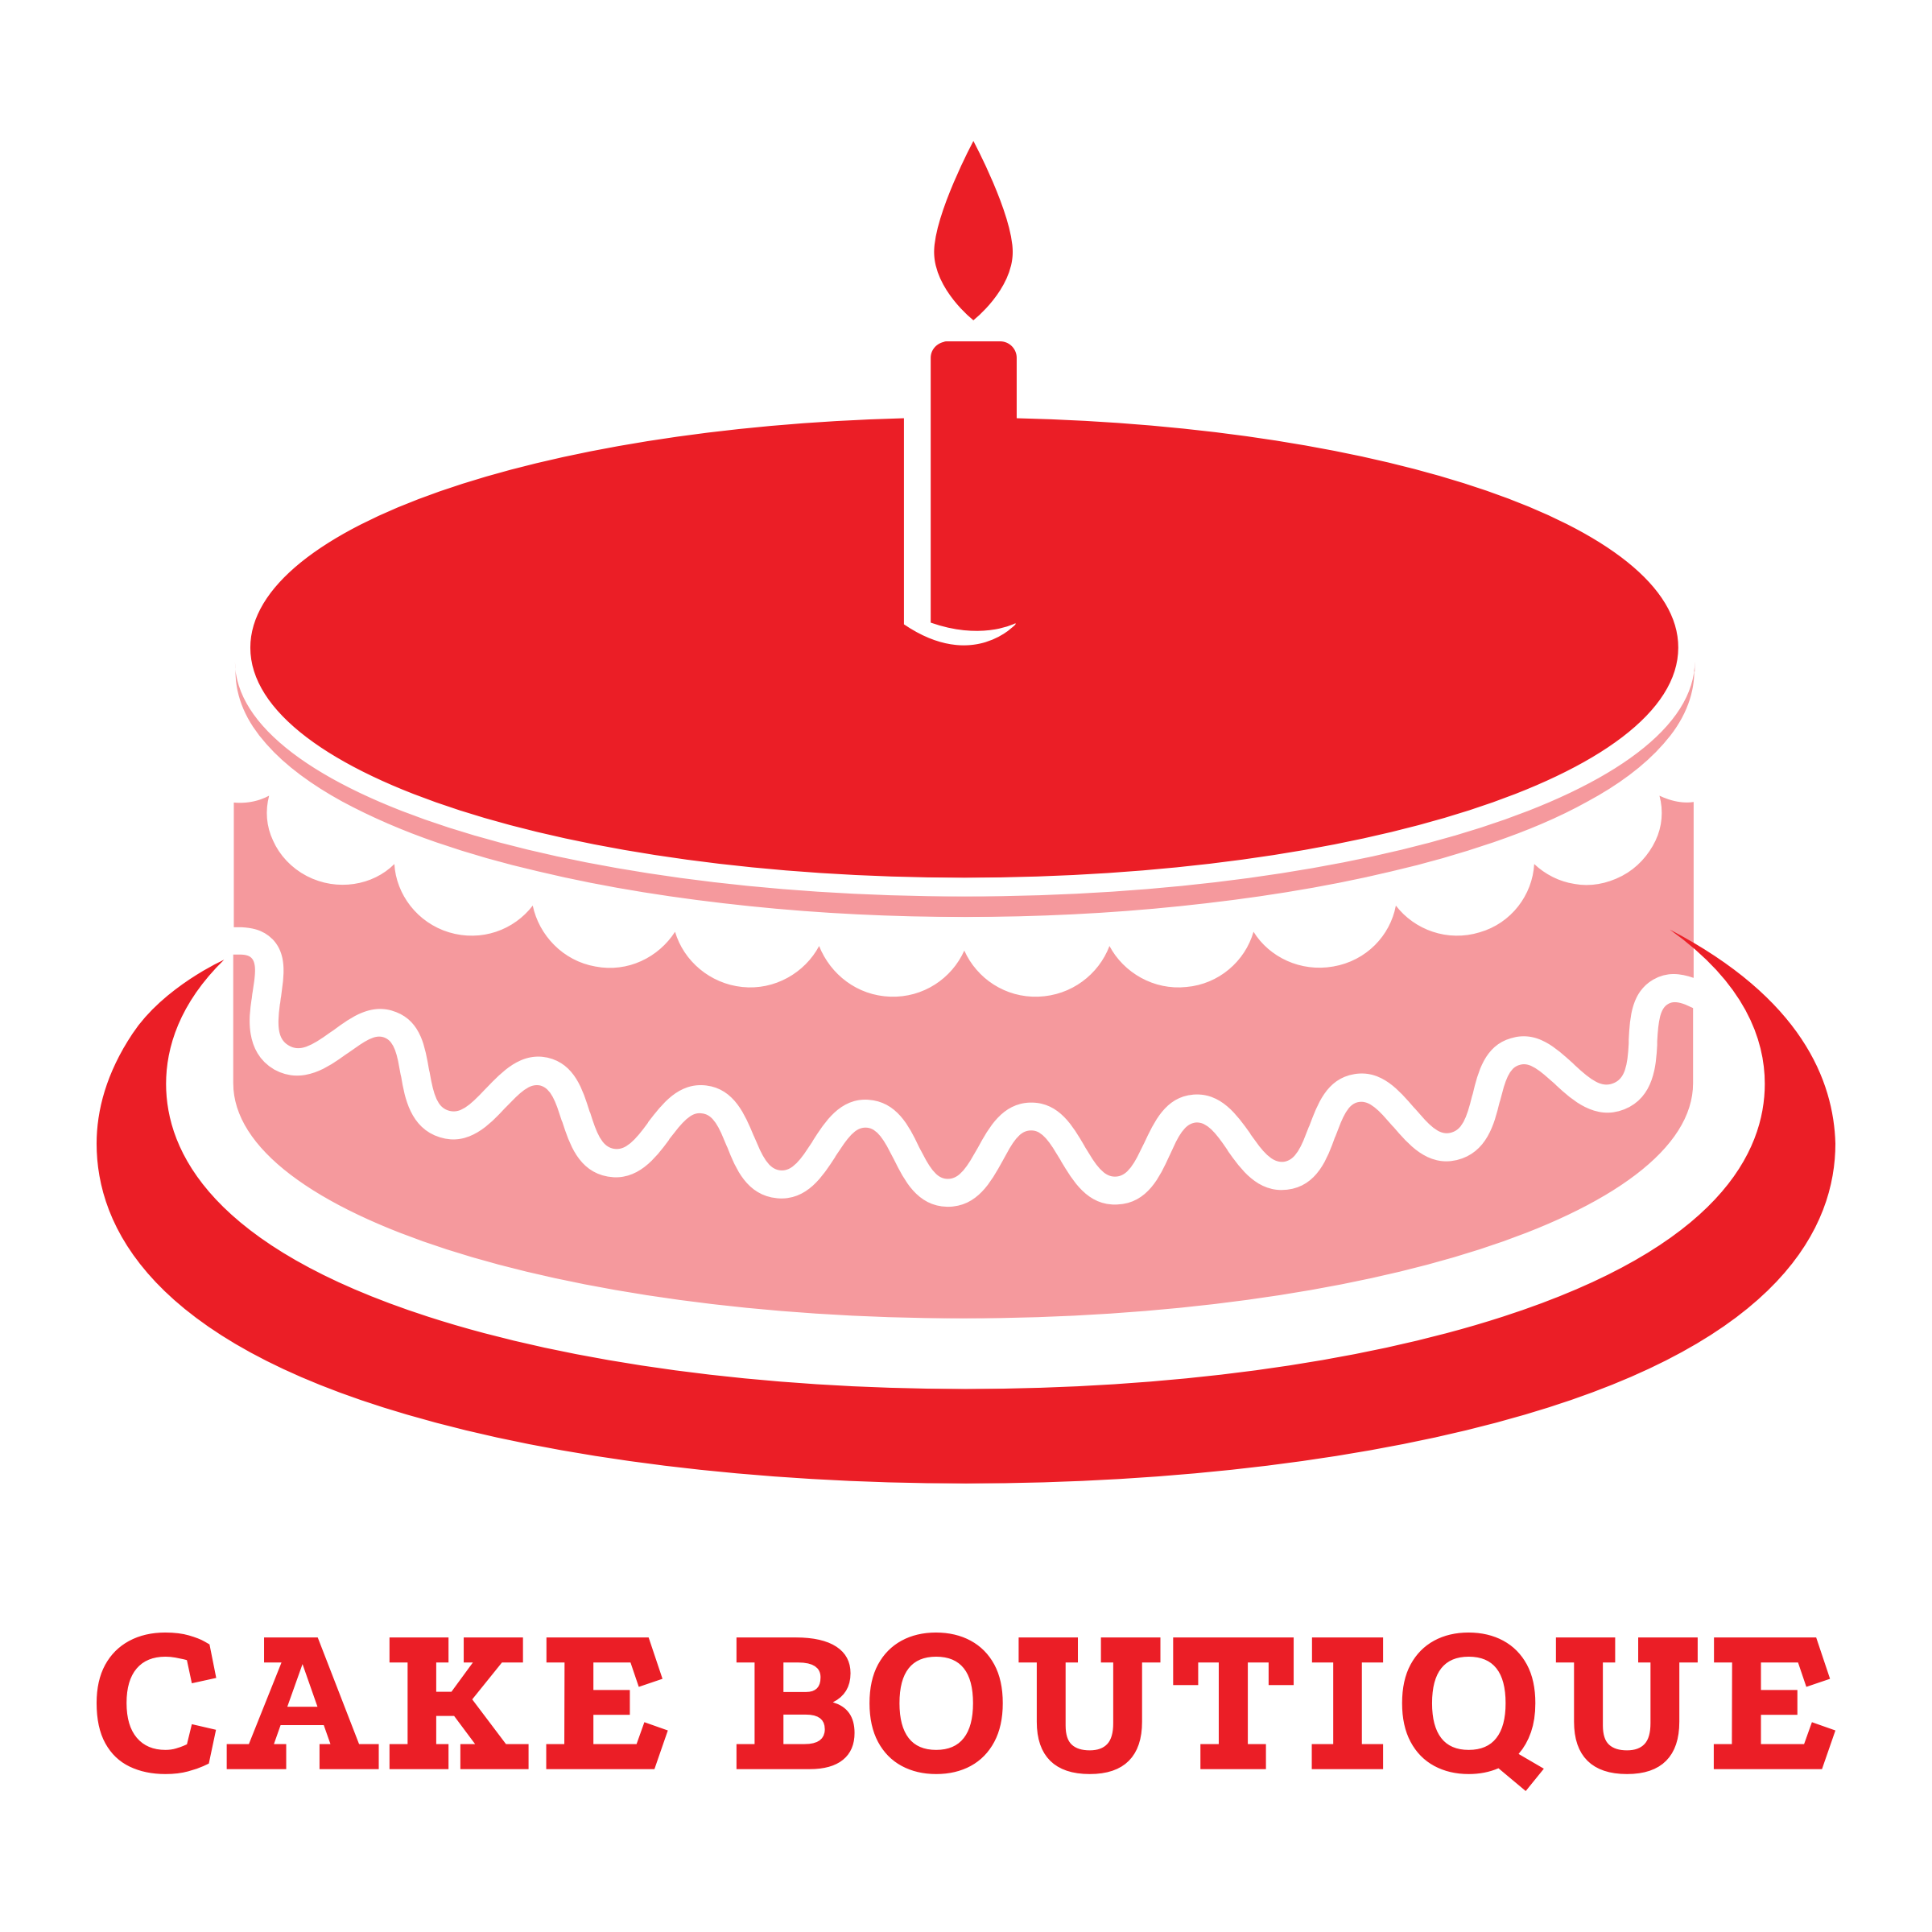 Cake Logo Design Vector, PNG, JPG Free Download | Designidea4u